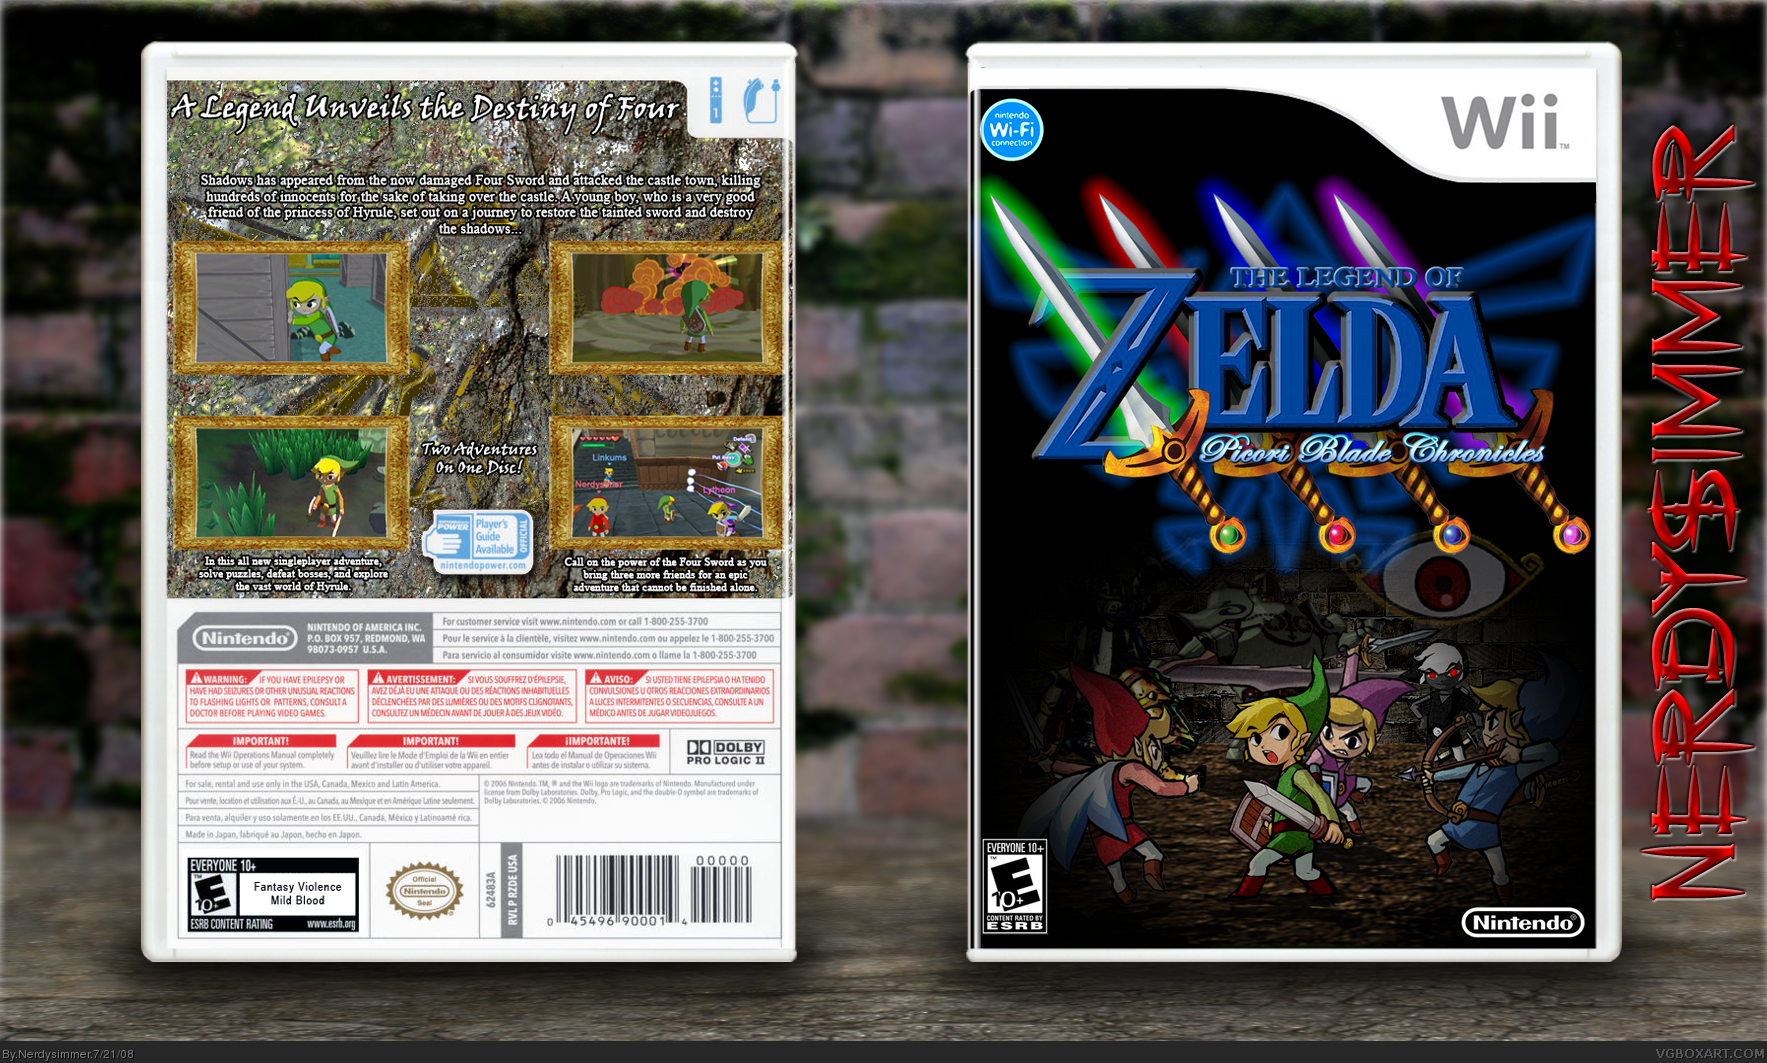 The Legend of Zelda: Picori Blade Chronicles box cover